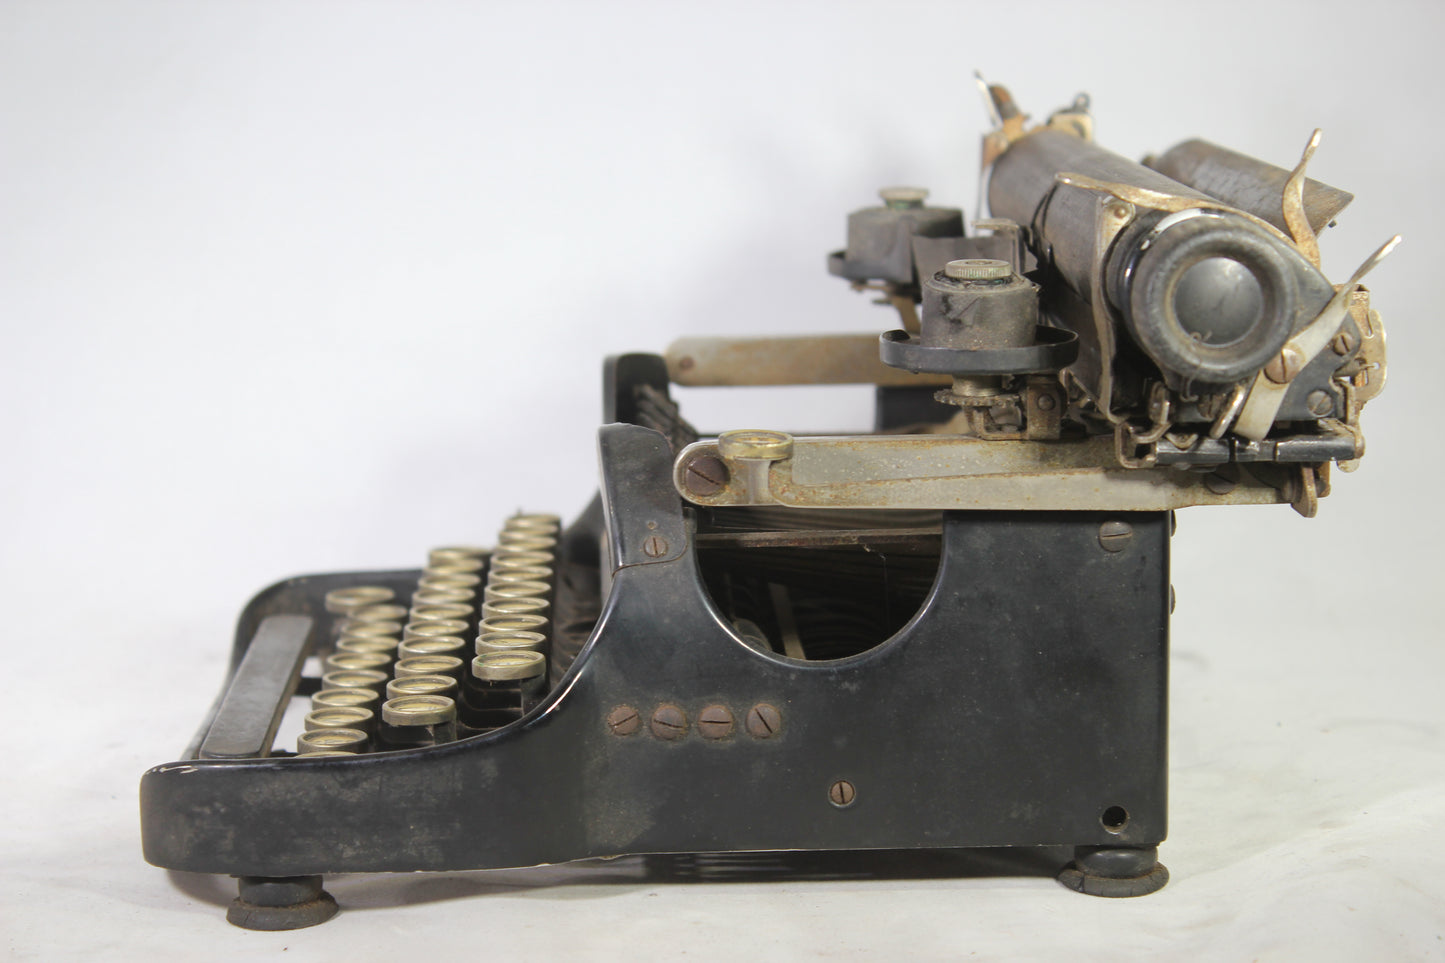 Corona 3 Manual Portable Folding Typewriter with Case, 1921